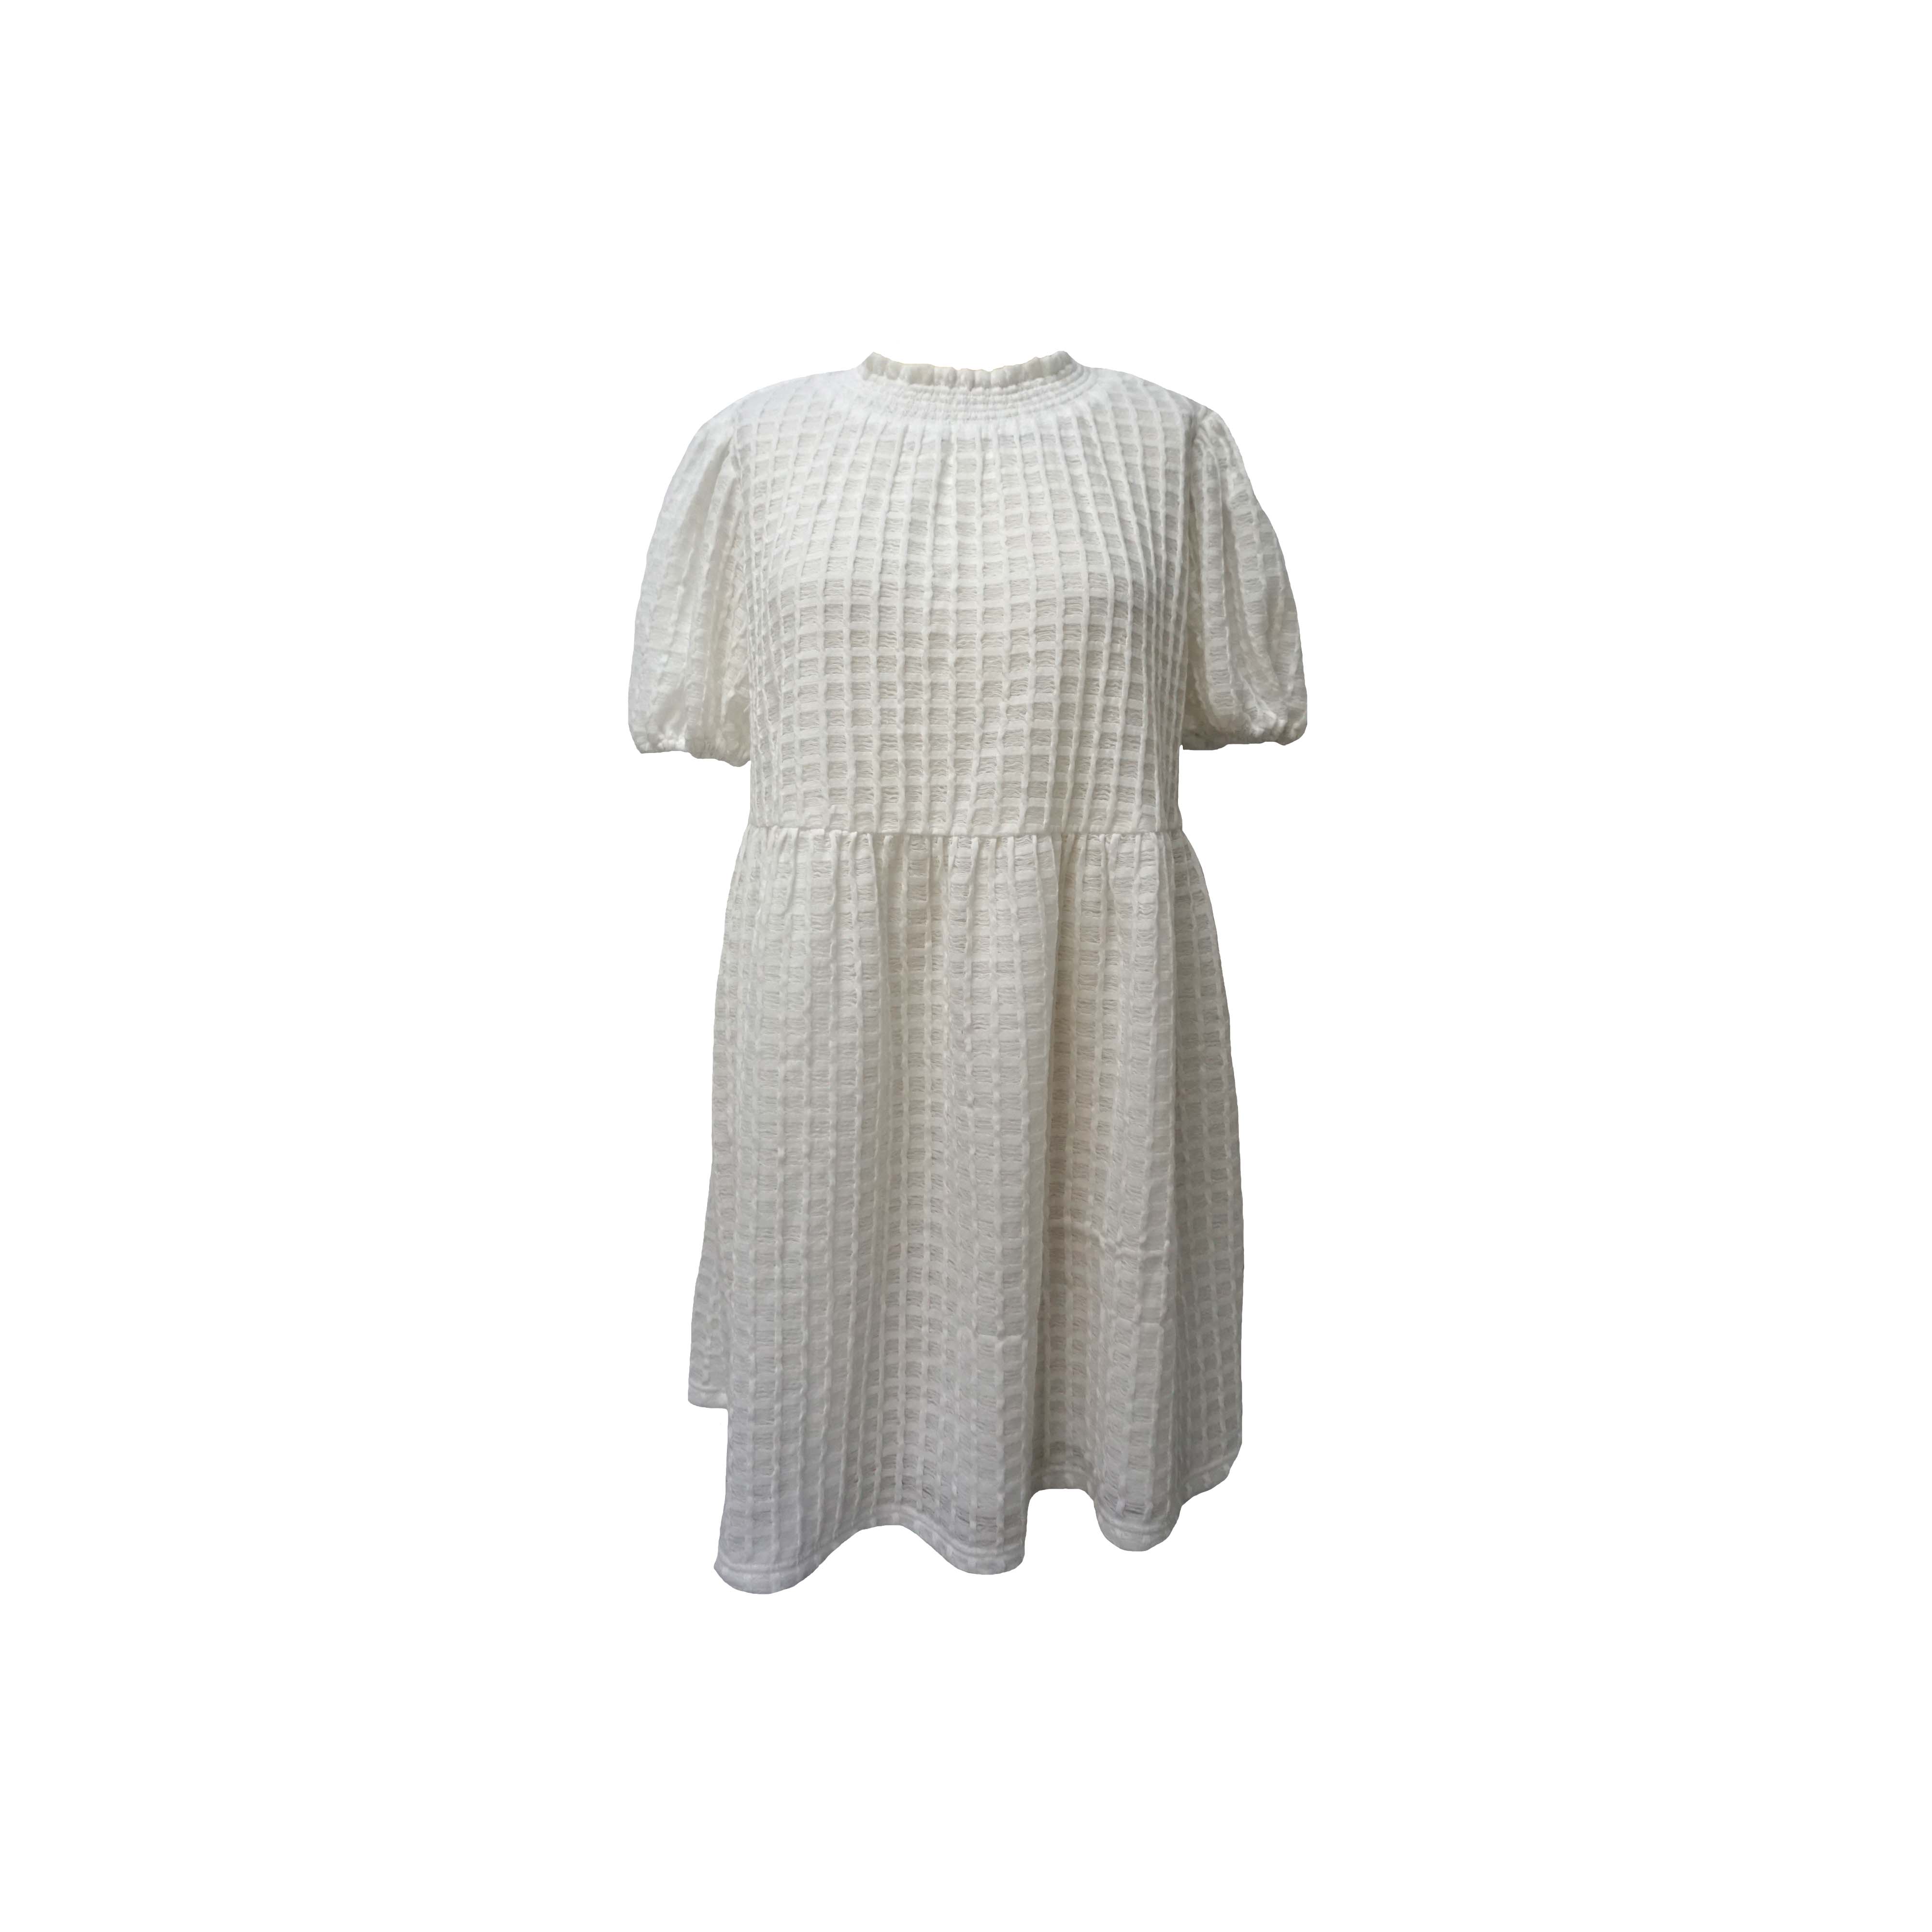 White versatile puffy sleeve dress